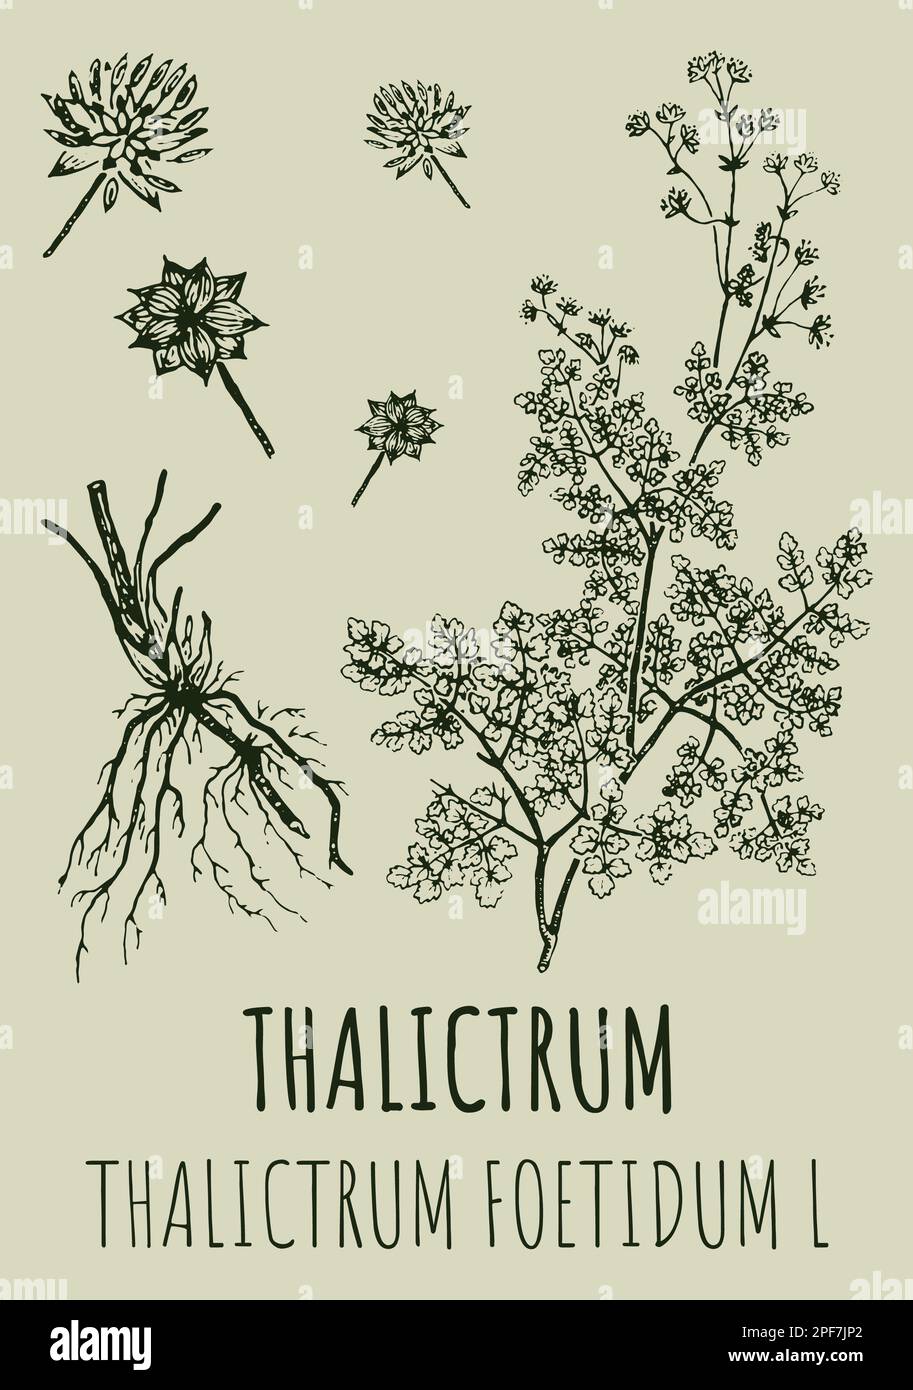 Drawings of THALICTRUM. Hand drawn illustration. Latin name THALICTRUM FOETIDUM L. Stock Photo